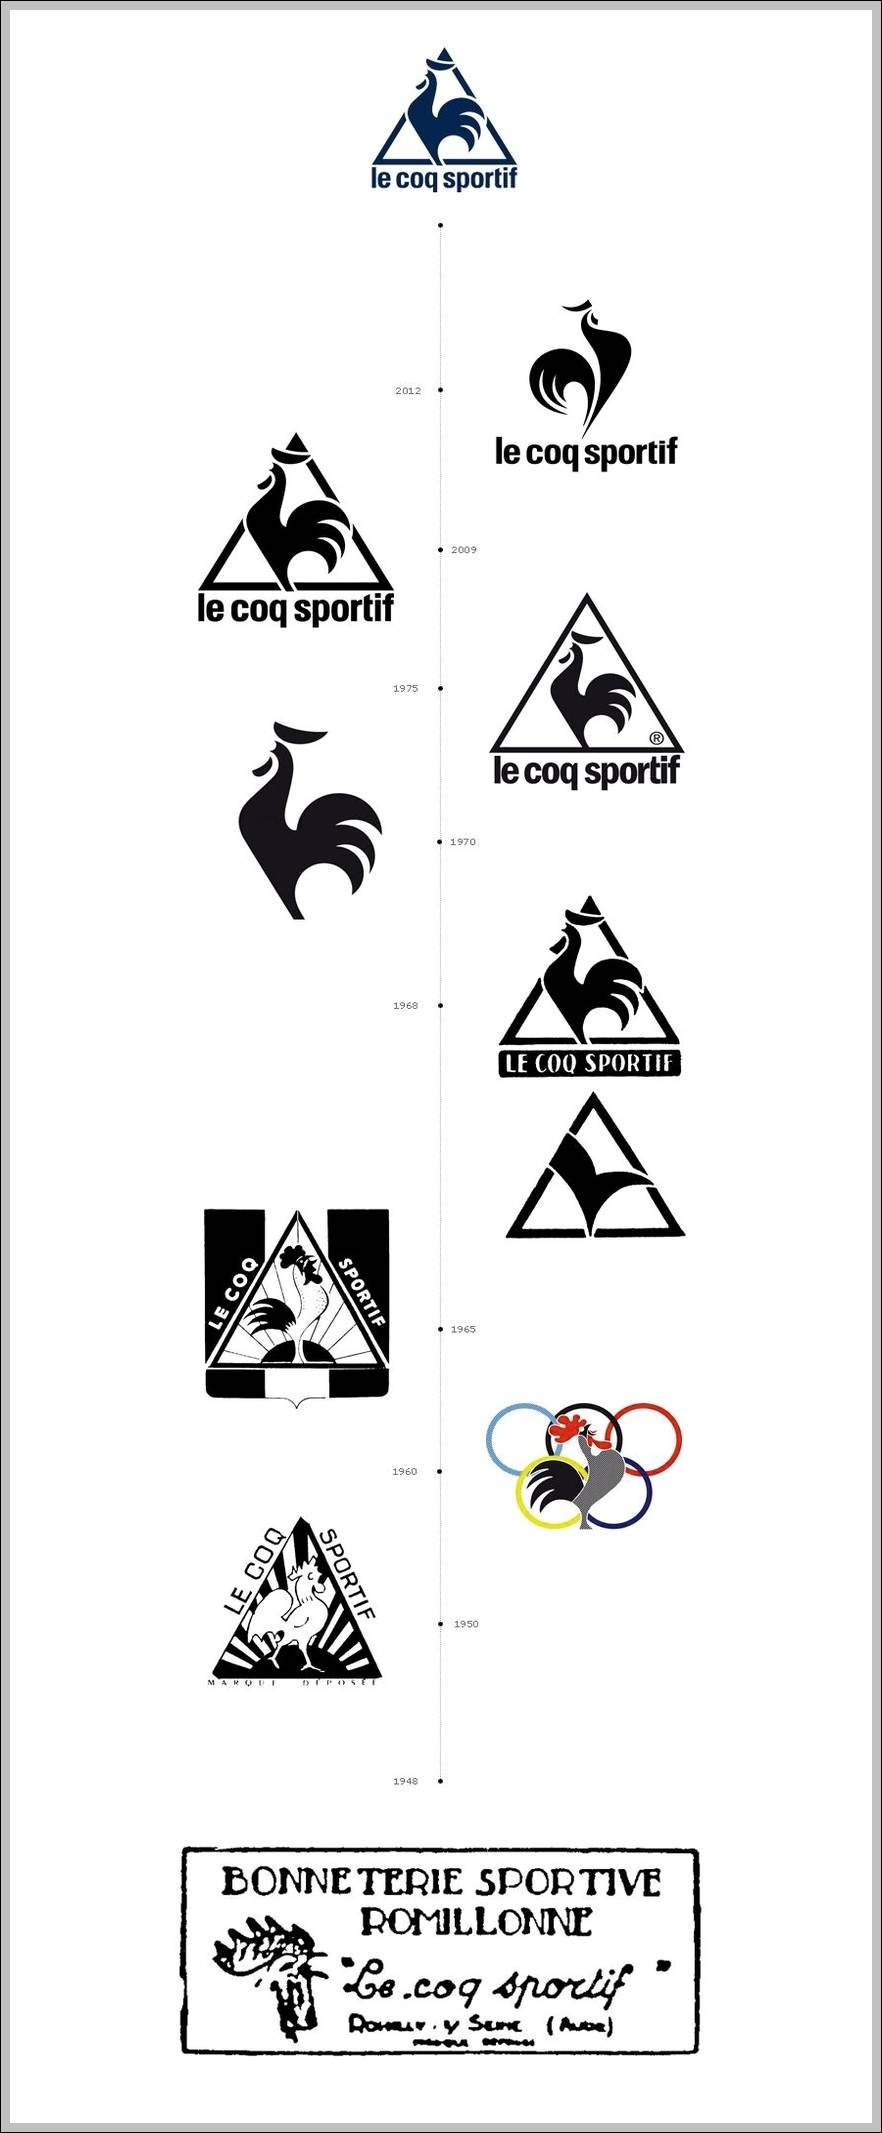 Le Coq Sportif Logo - Le Coq Sportif logo logo evolution | Logo Sign - Logos, Signs ...